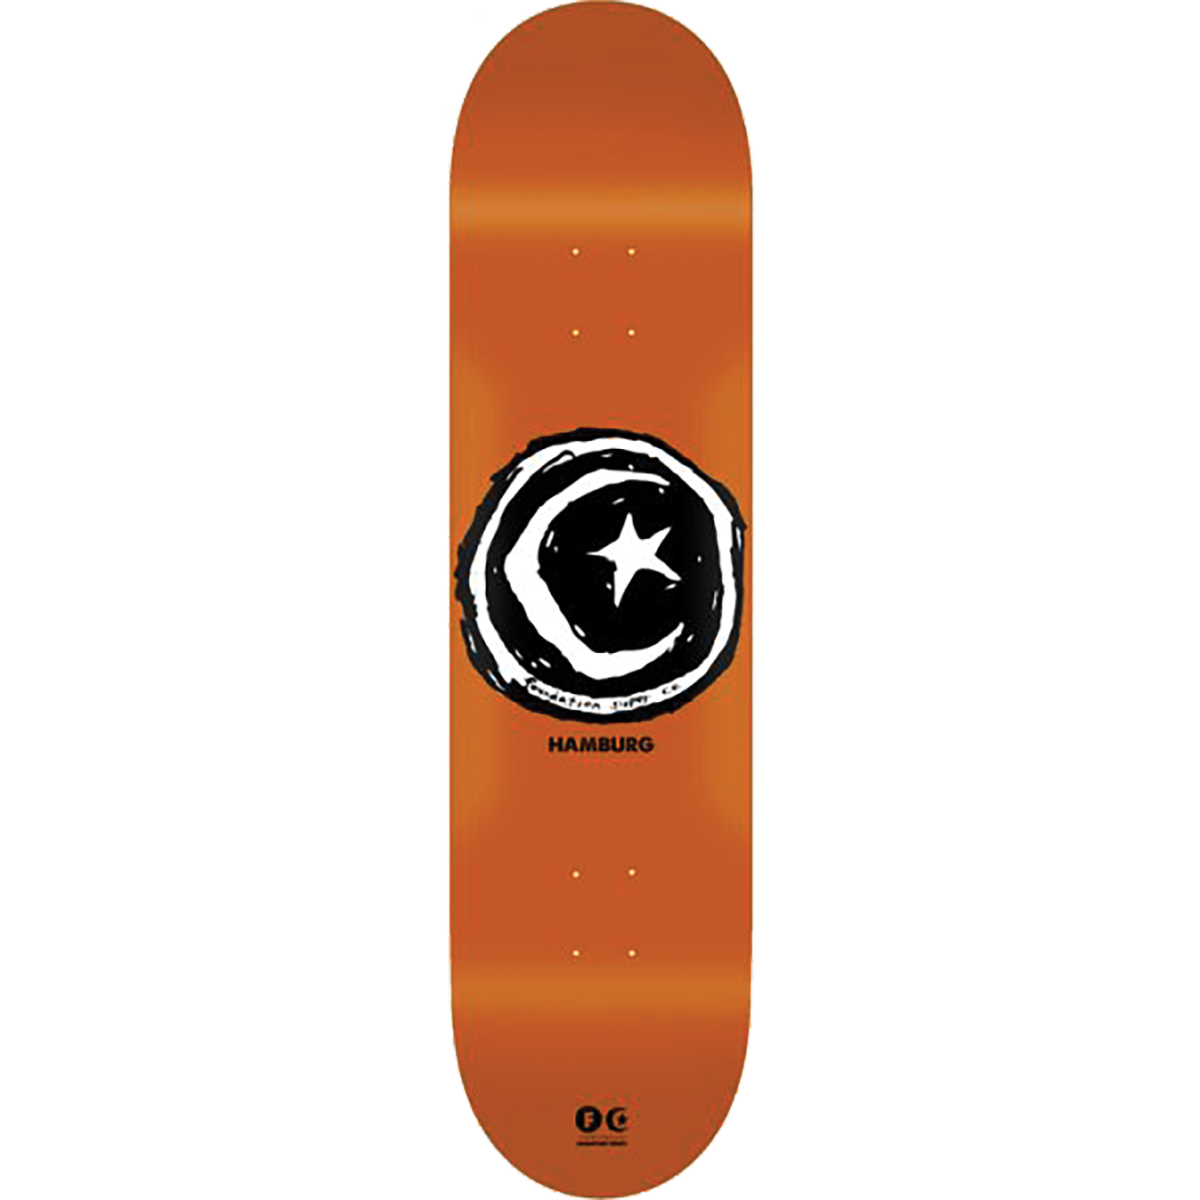 Foundation Hamburg Signature Skateboard Deck -8.75 DECK ONLY